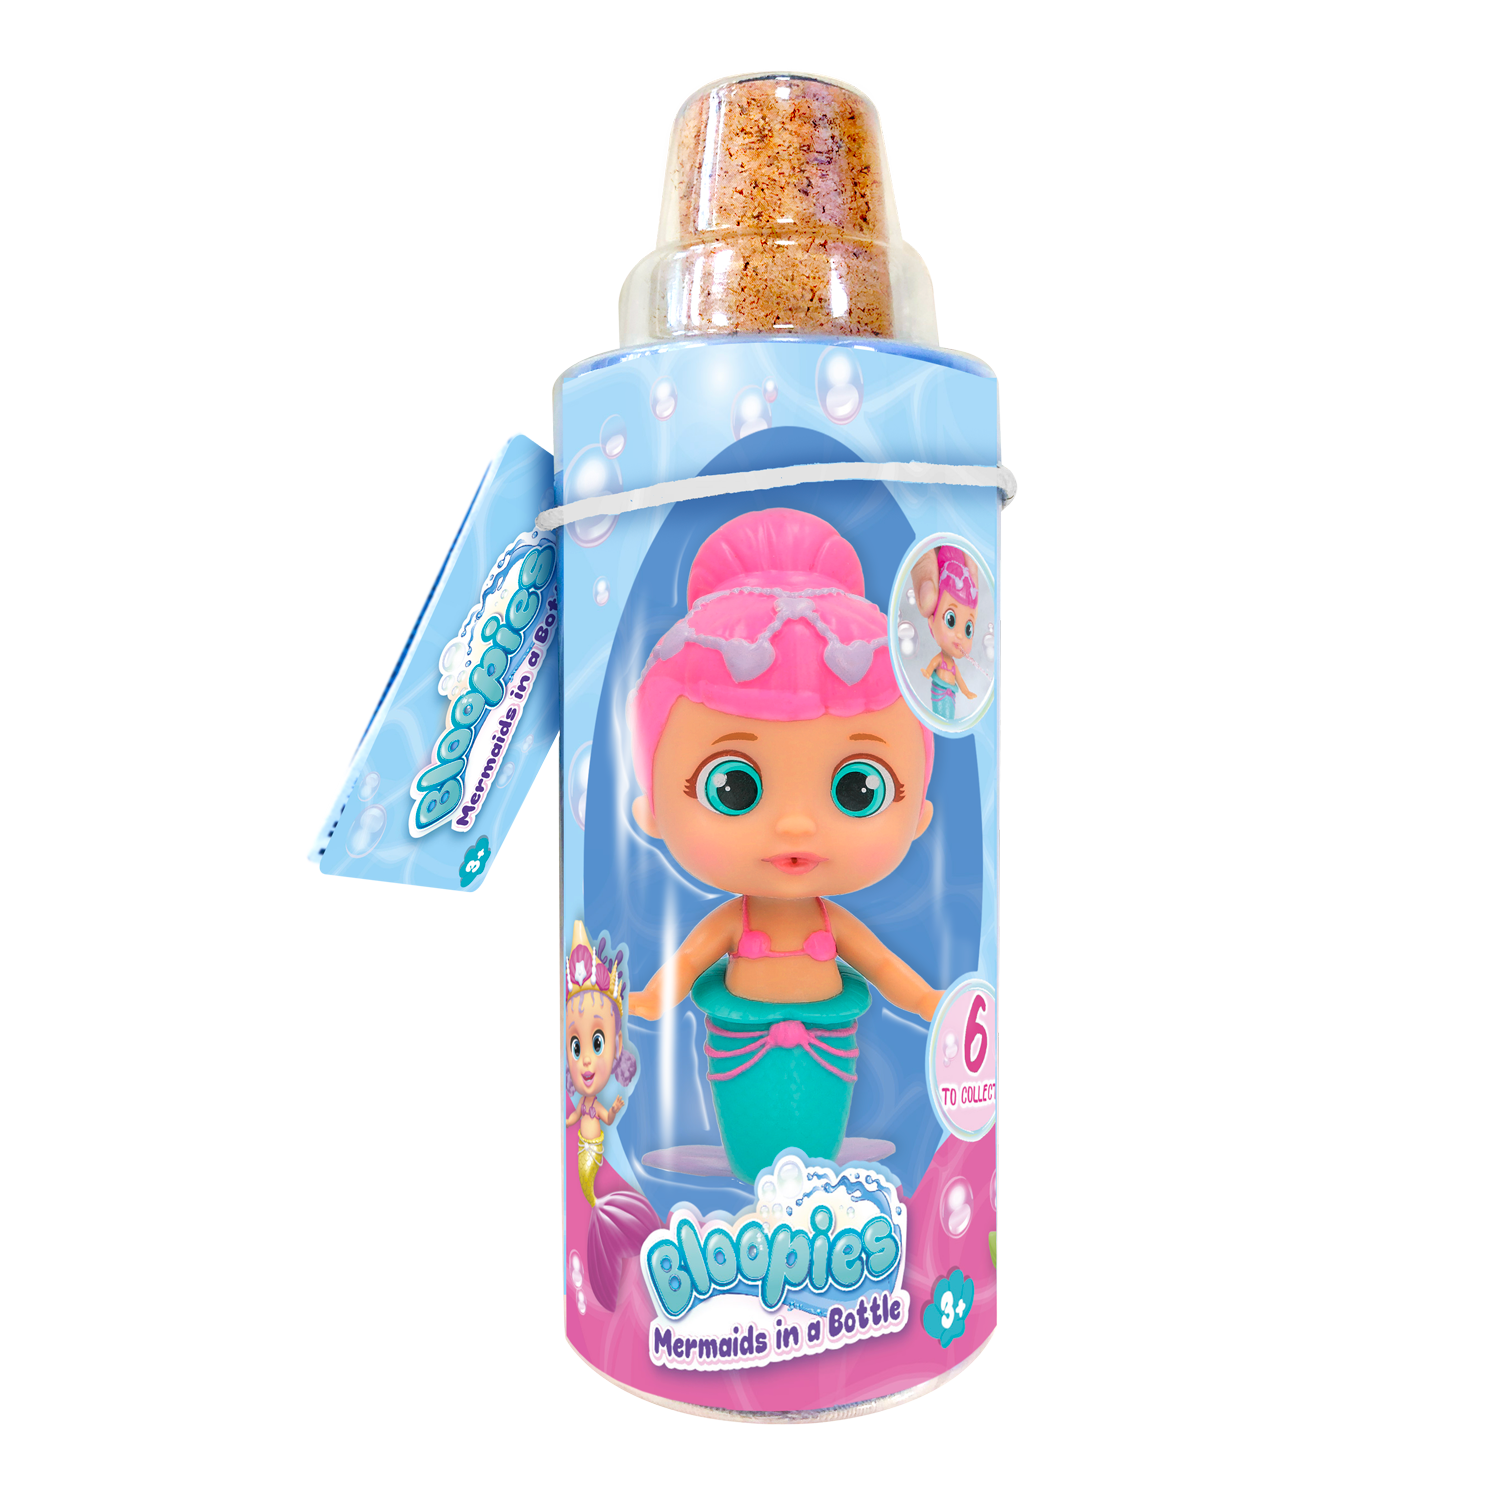 Bloopies mermaids in a bottle, sirenette spruzza-acqua in bottiglia - 